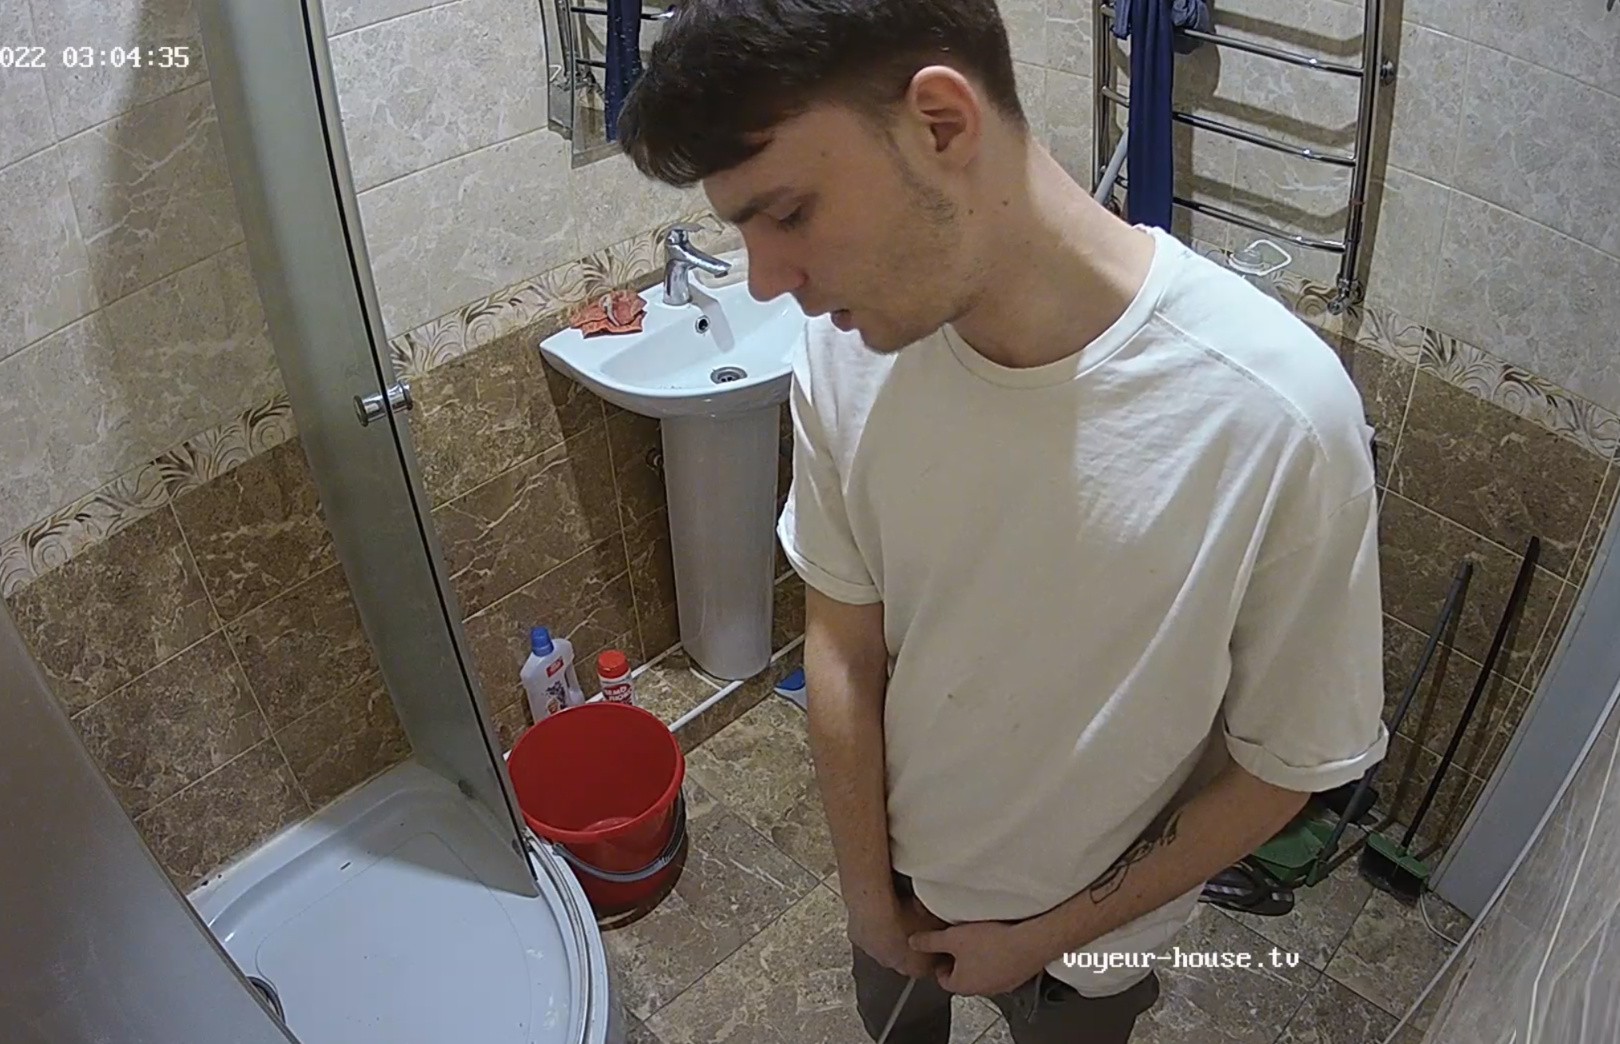 Watch Regular daily live stuff Guest guy peeing 2 Mar 2022 Naked people with Medea in Bathroom The biggest Voyeur Videos gallery